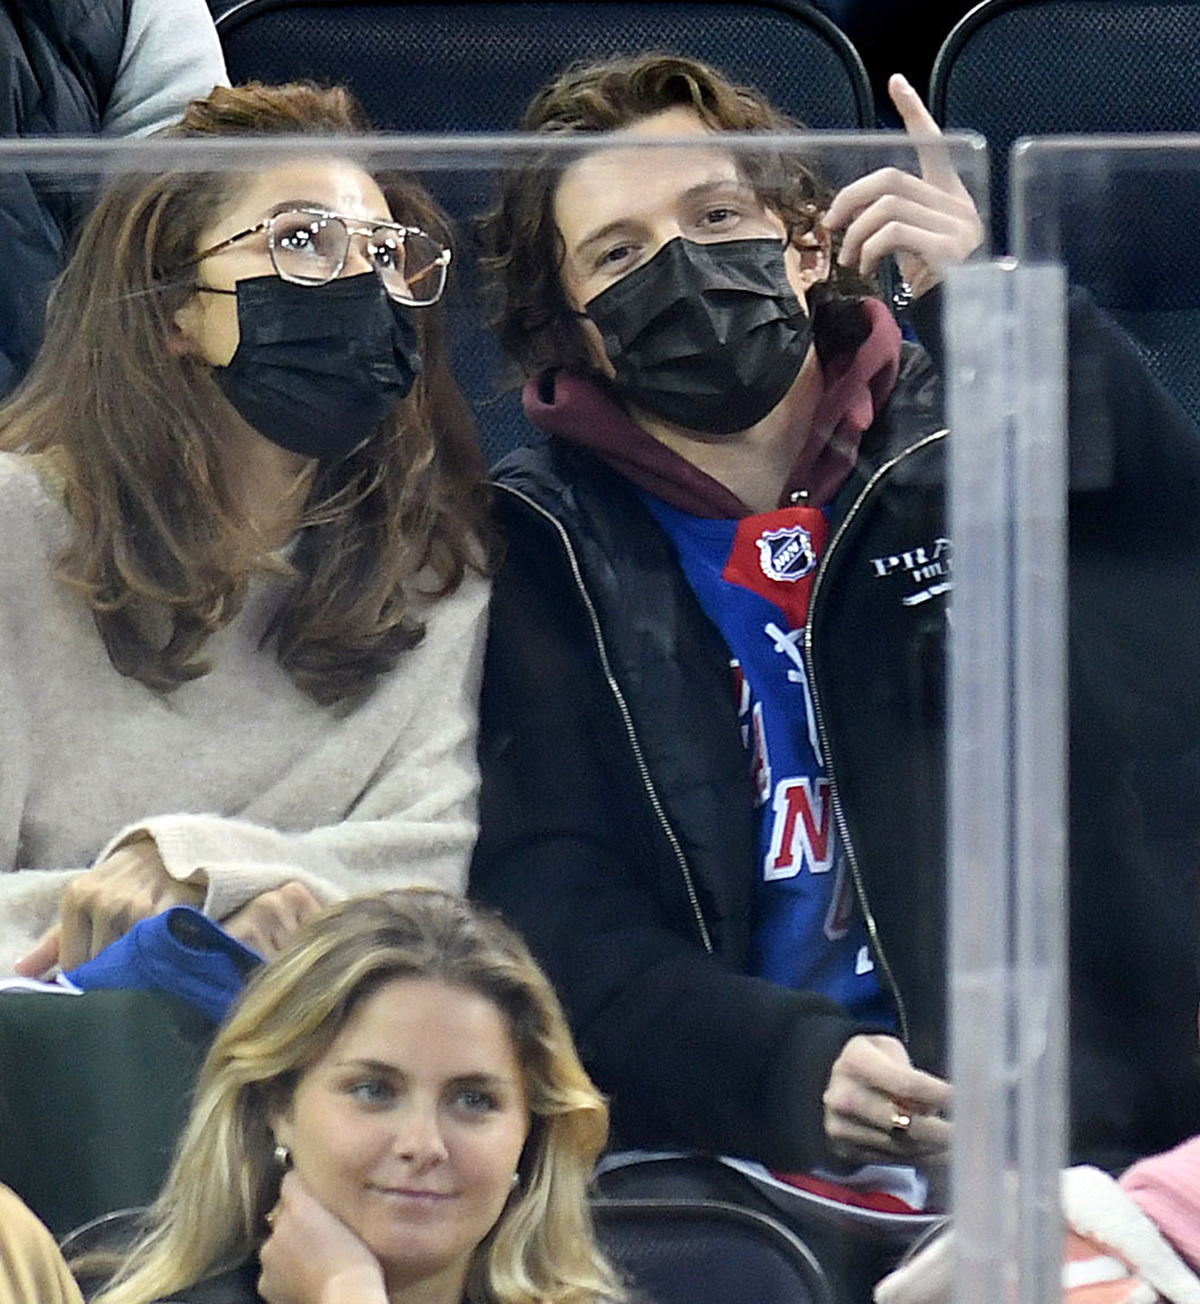 Zendaya and Tom Holland wear matching jerseys to hockey game